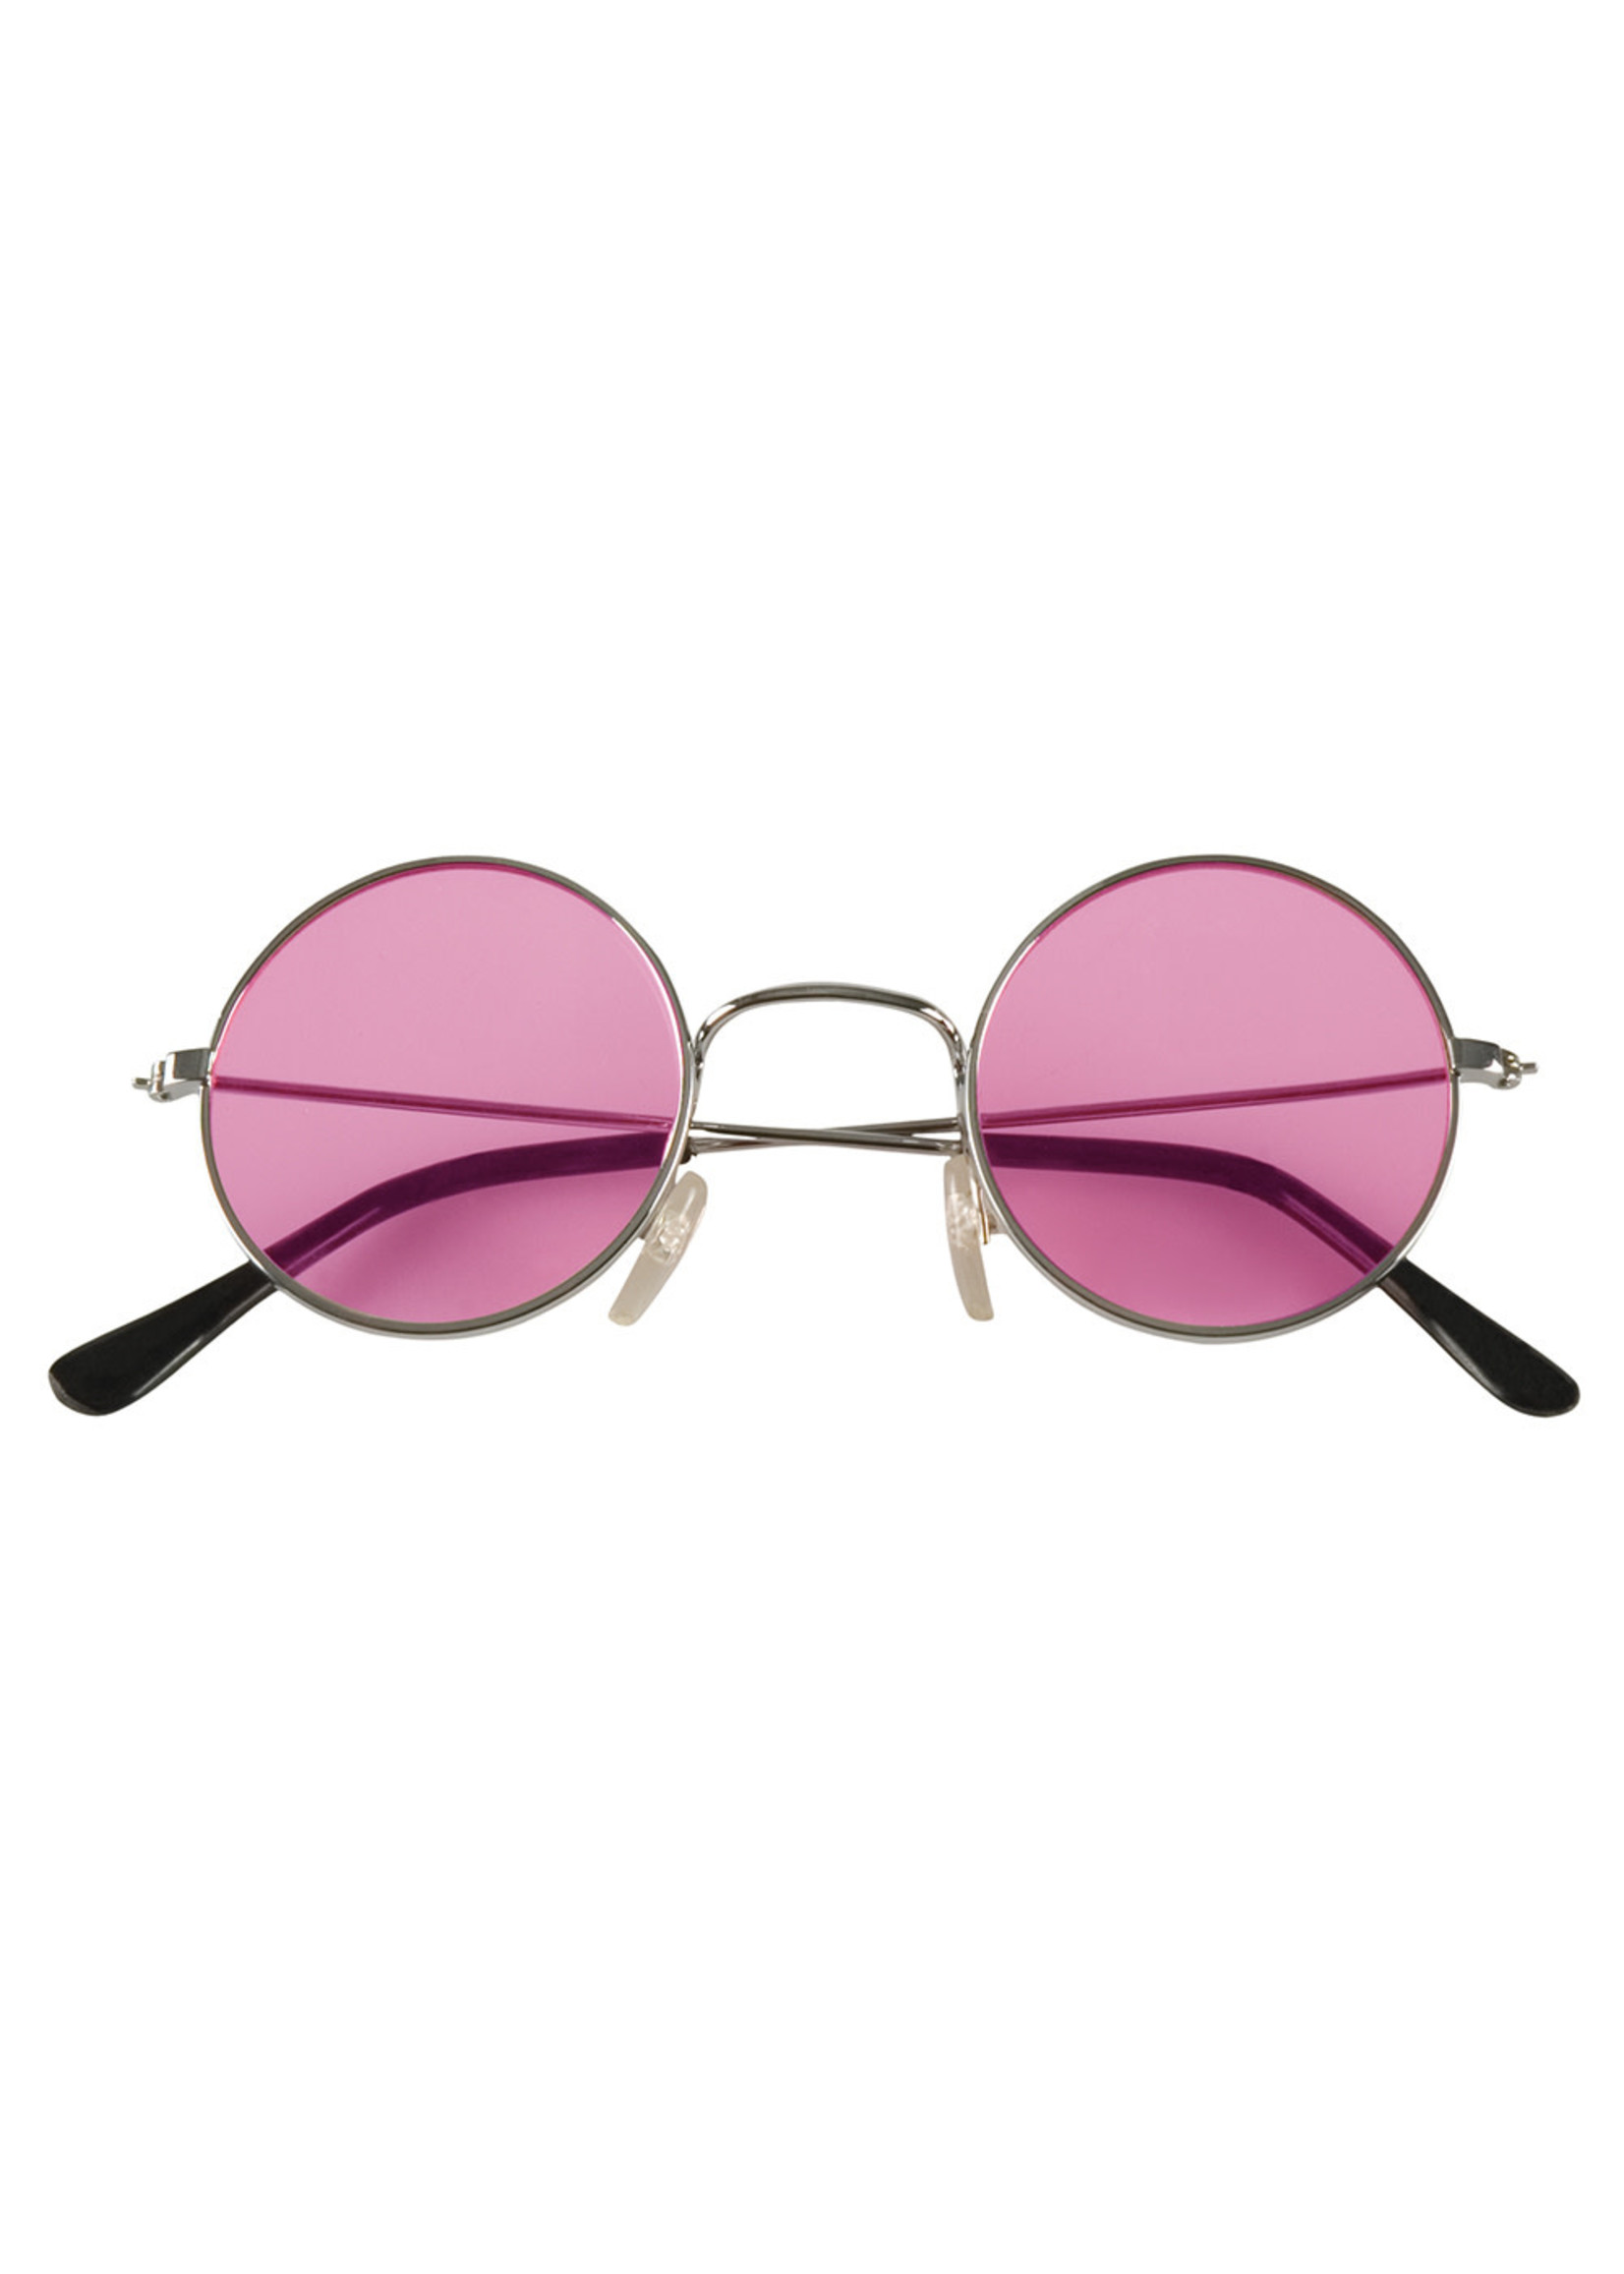 Feestkleding Breda Hippie bril roze